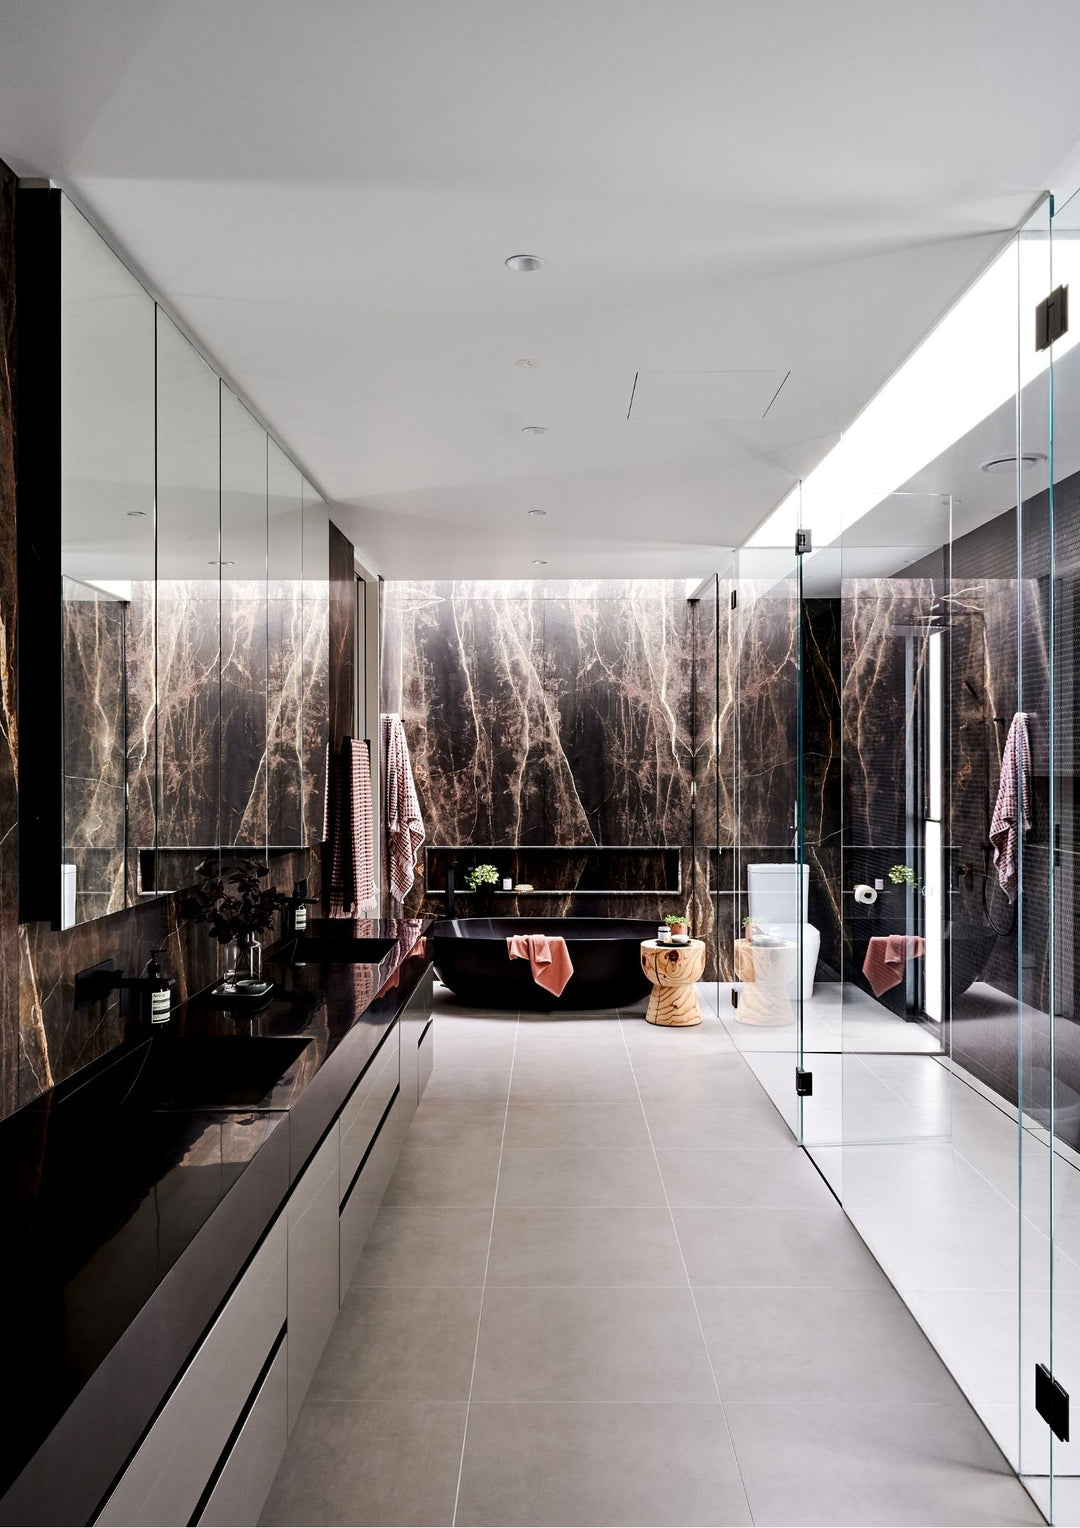 Deborah Schmideg has created a Stunning Top 50 Rooms Master Ensuite for Australian House and Garden